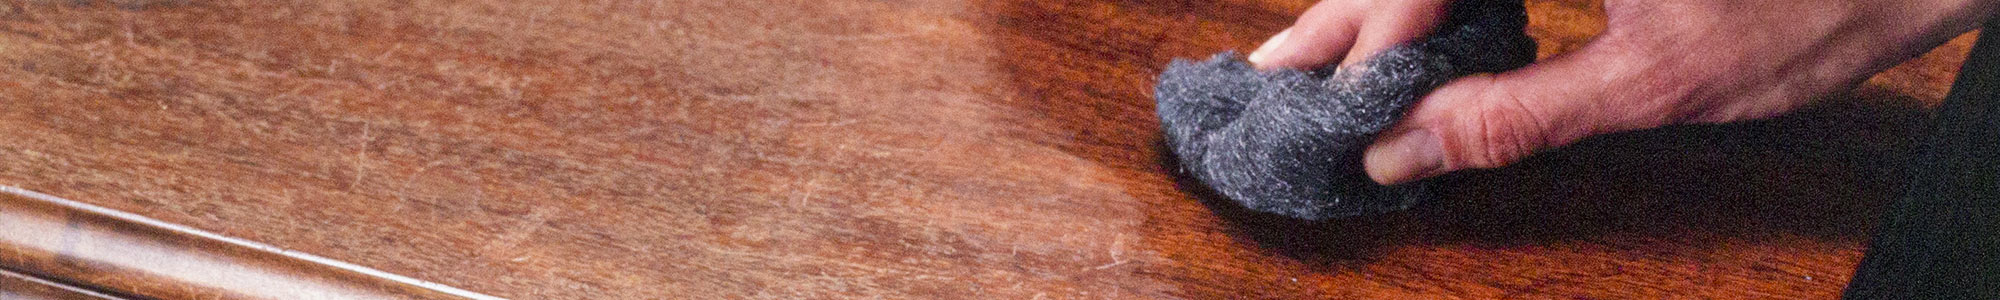 Restore A Finish For Wood 2 Colors removedor de arañazos Pro Set Cover,  oculta arañazos en muebles de piso de madera, madera oscura y clara -  AliExpress